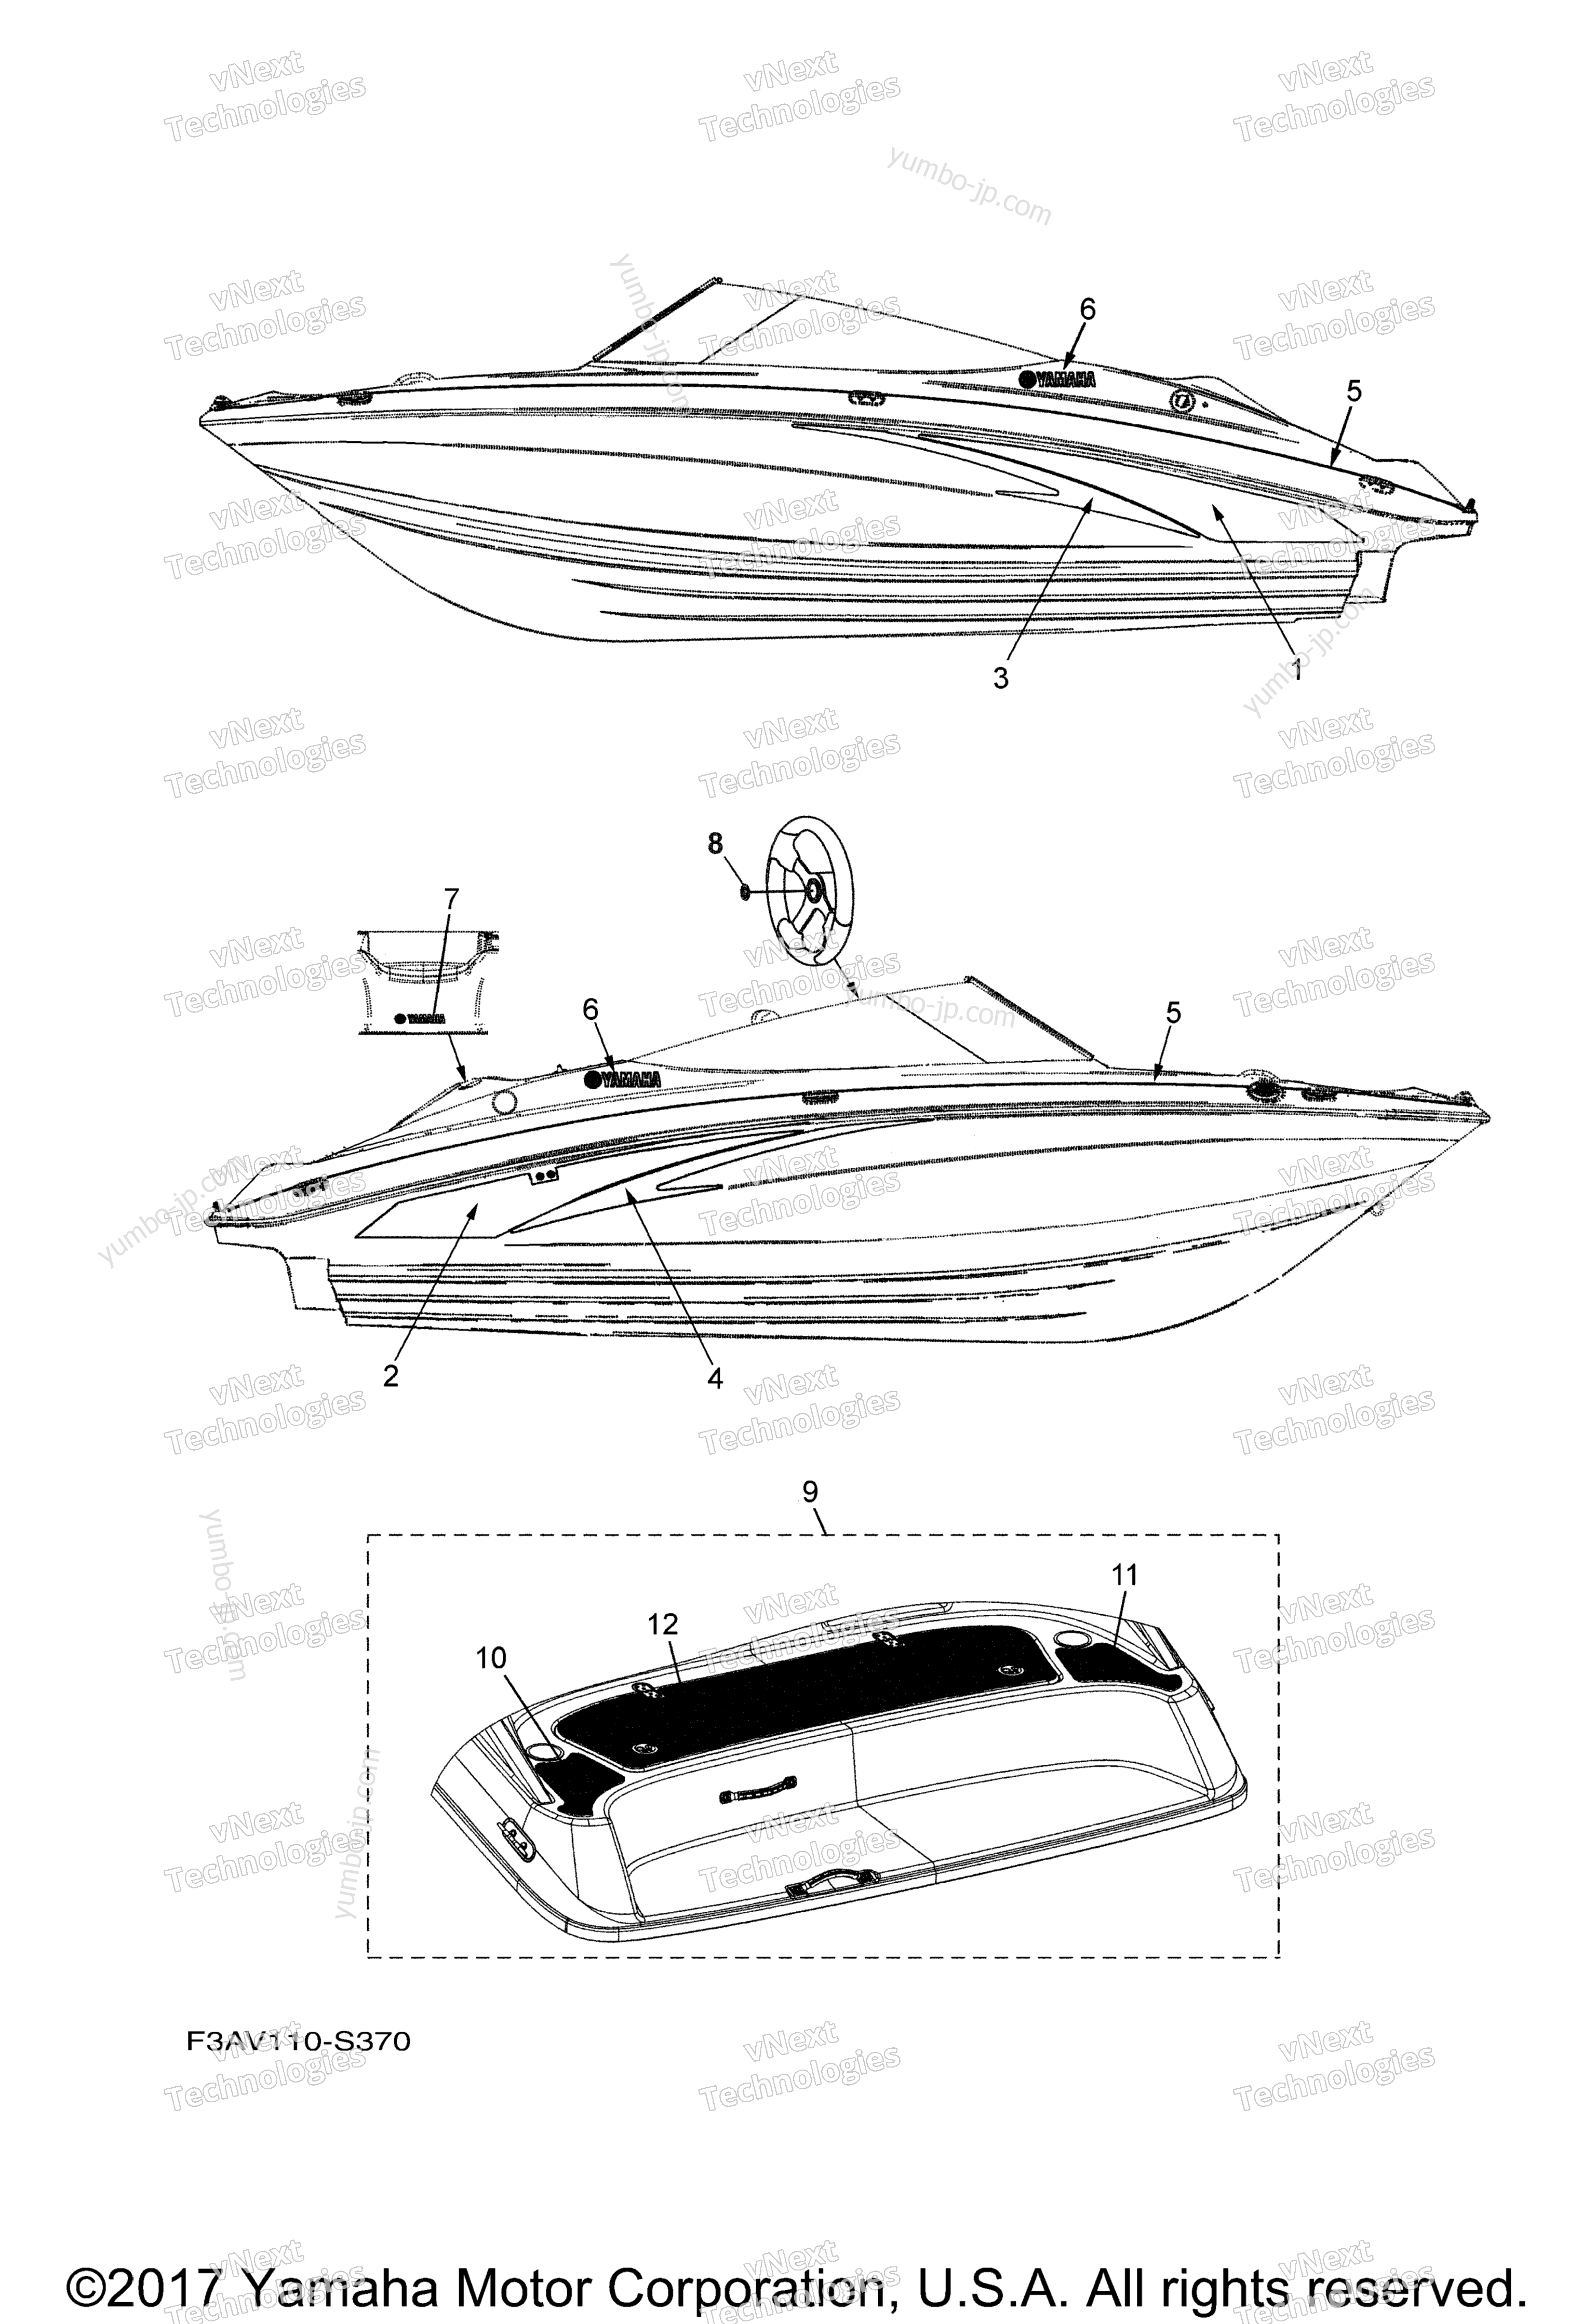 Graphics & Mats for boats YAMAHA AR190 CALIFORNIA (RX1800ALS) CA 2017 year